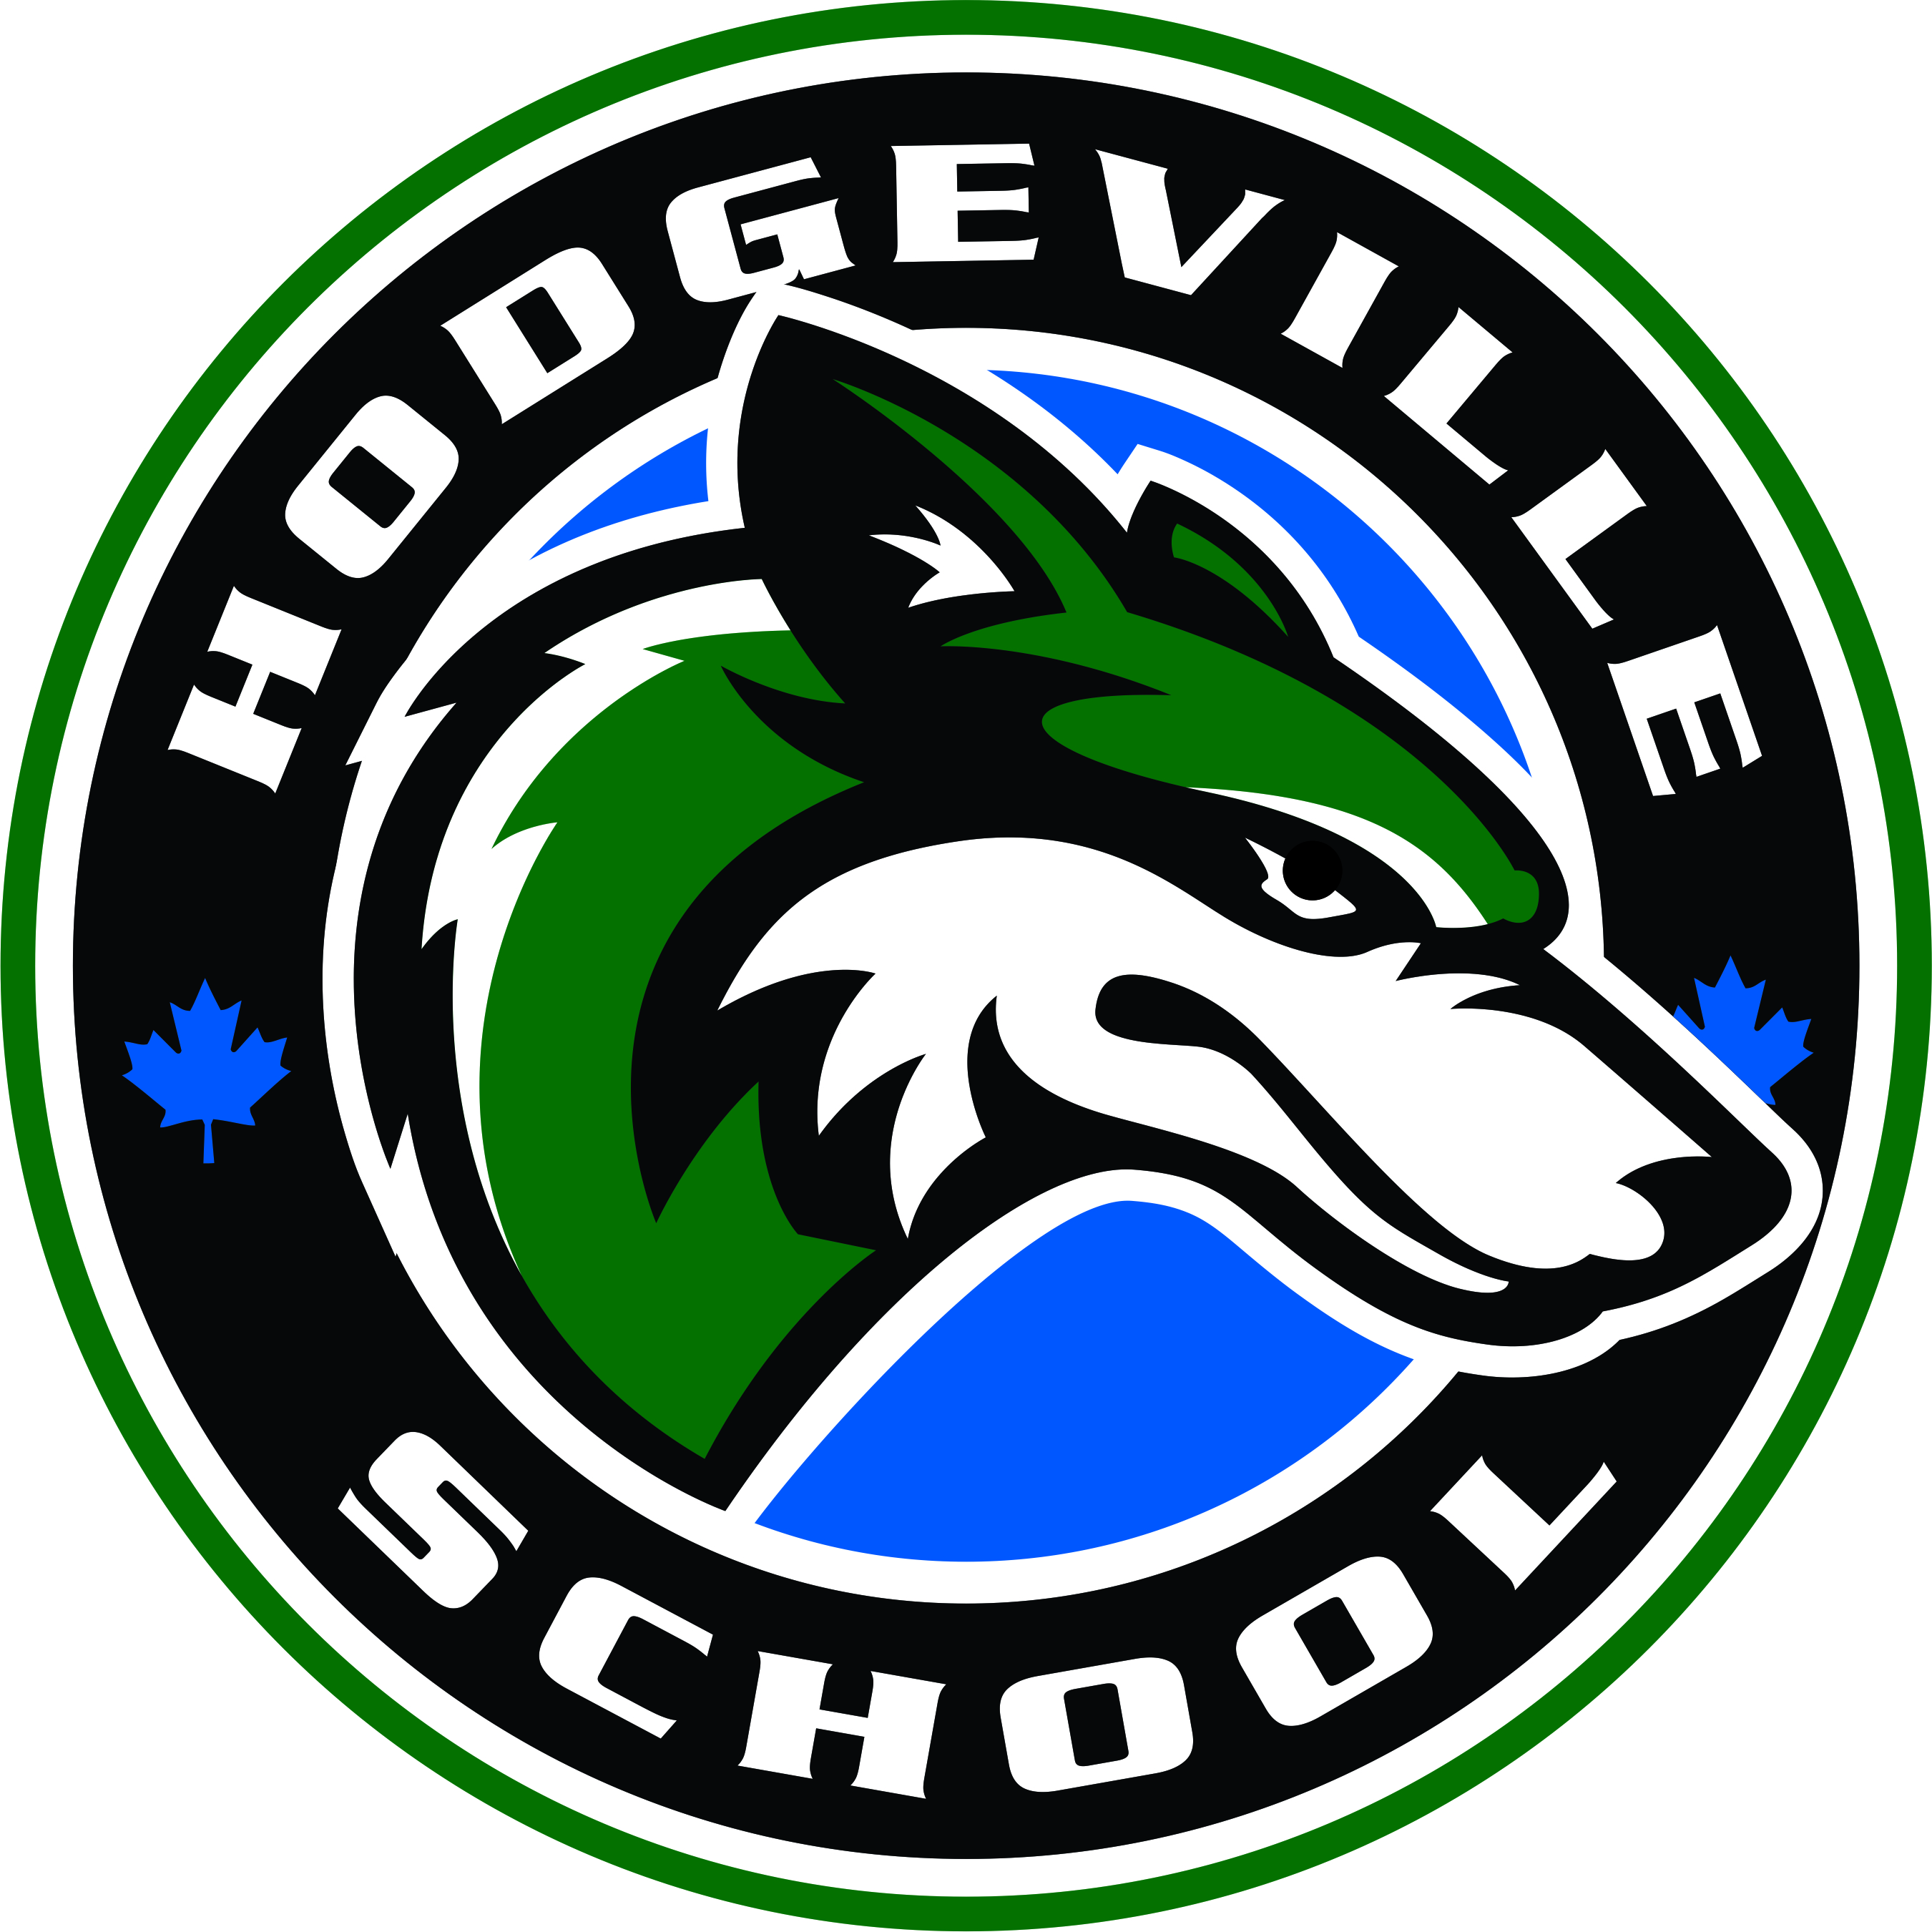 Welcome to Hodgeville School!